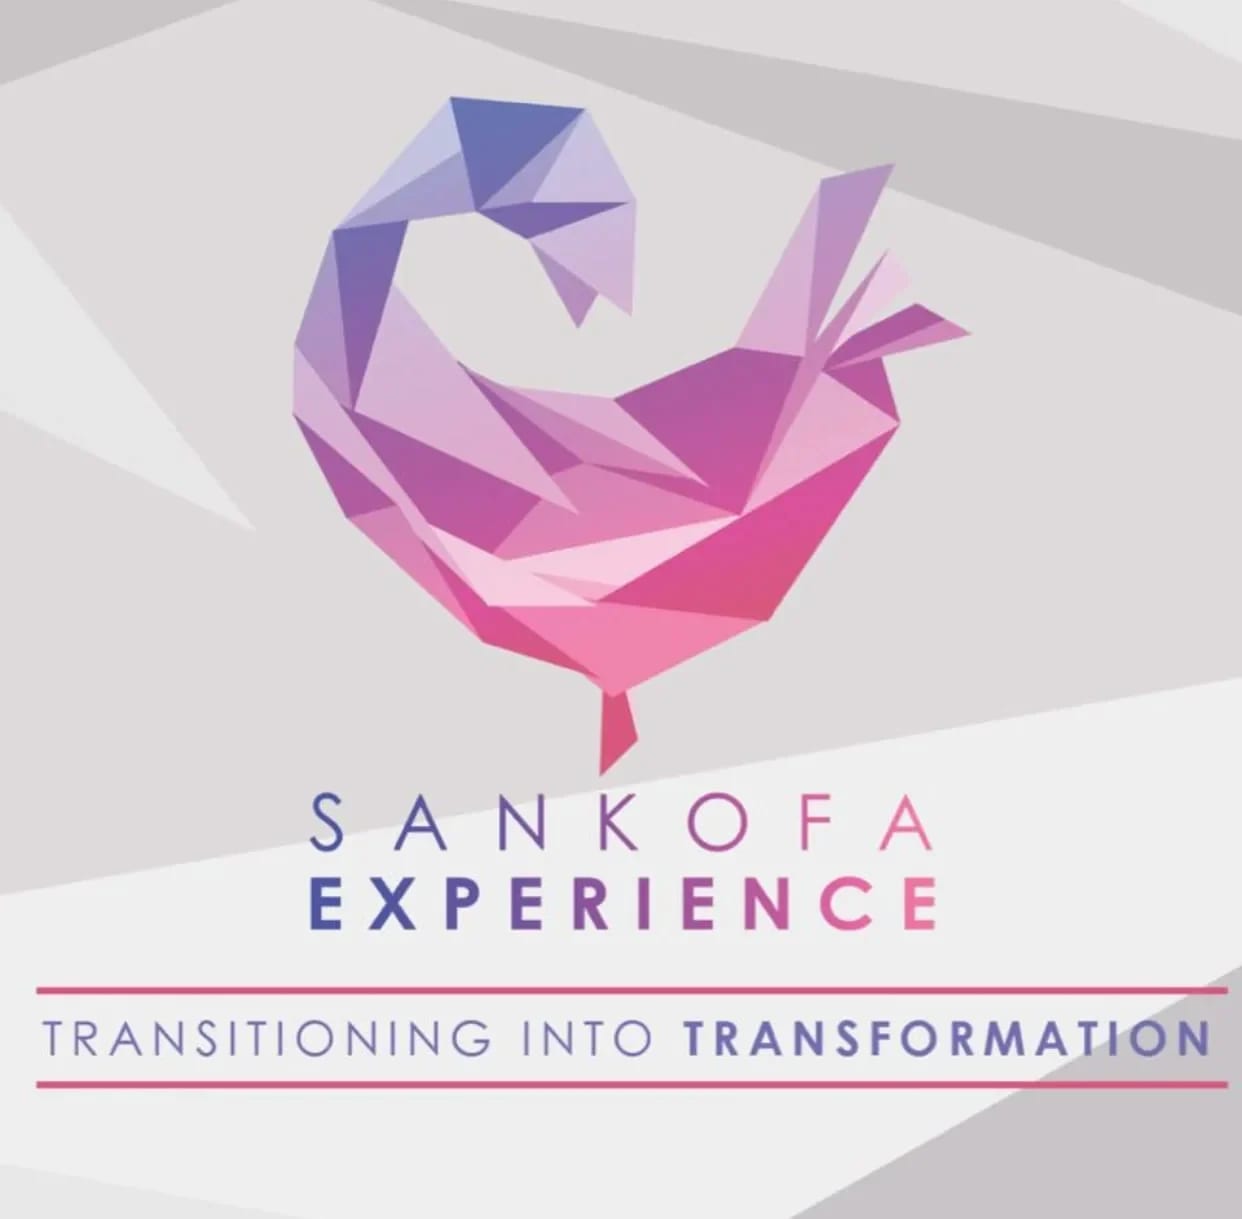 The Sankofa Experience